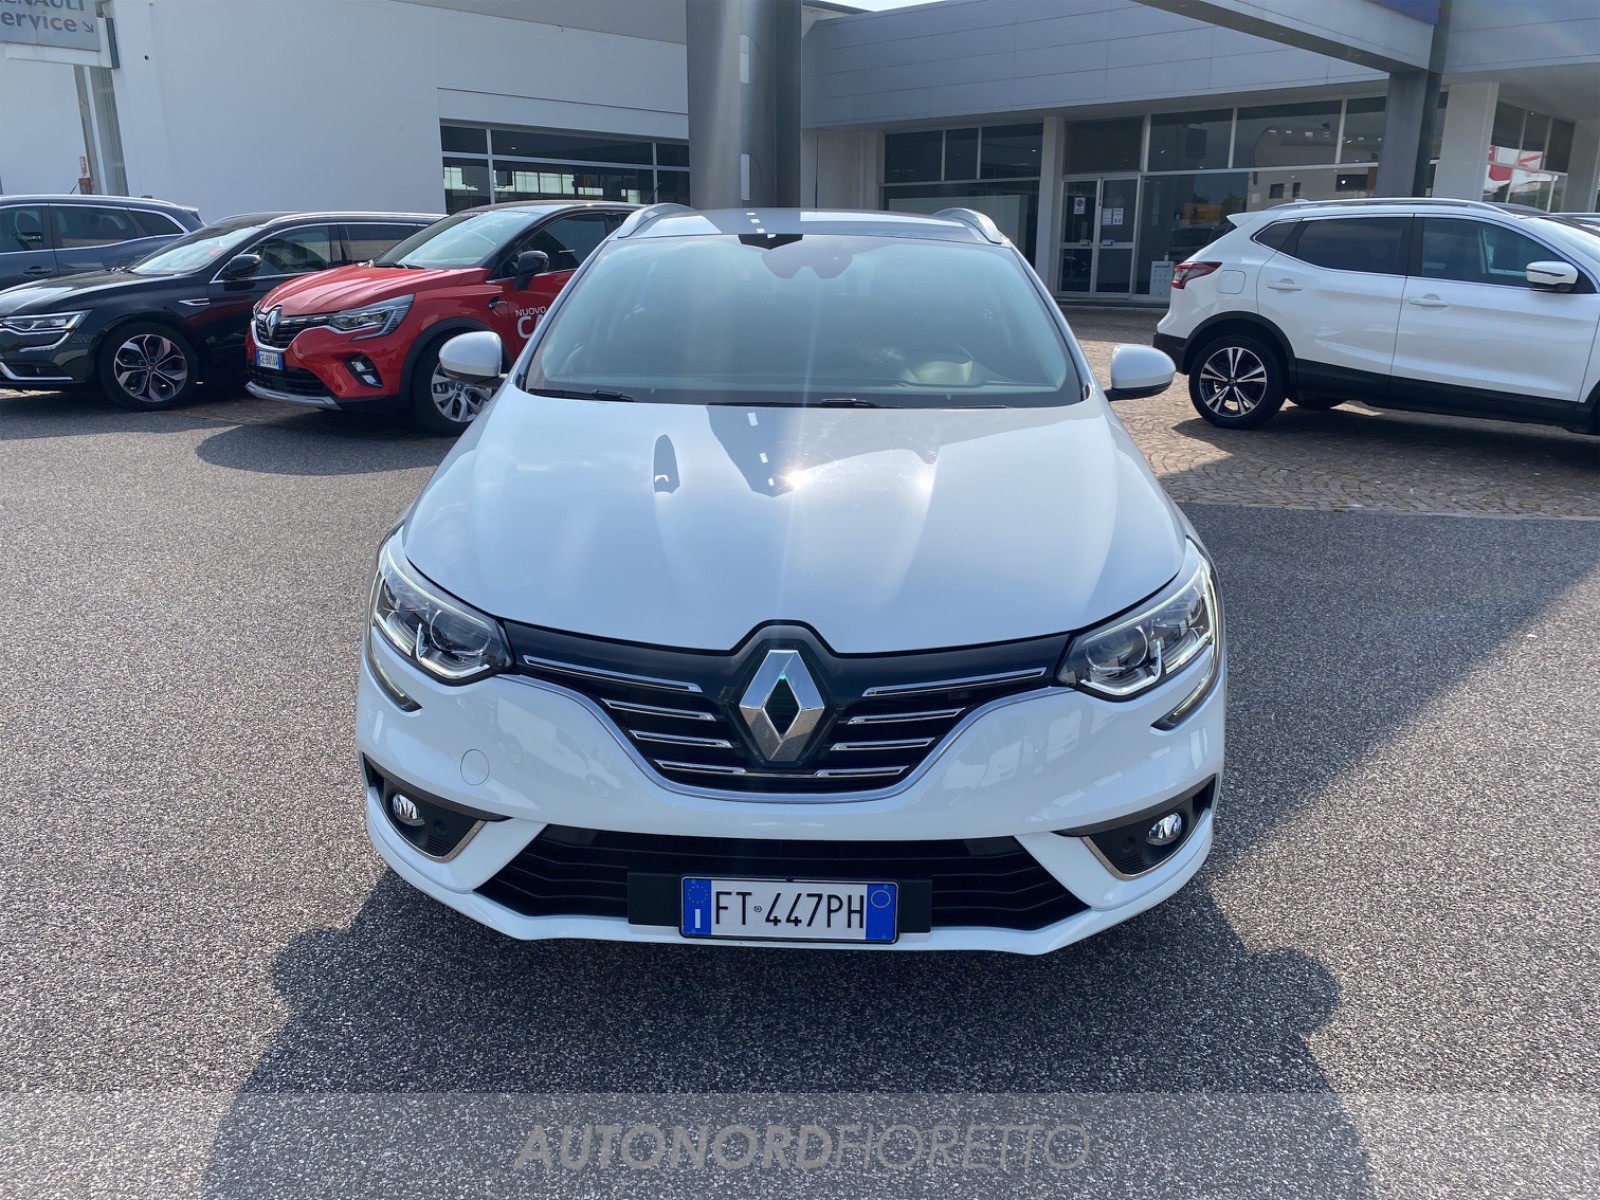 AUTONORD Renault Mégane